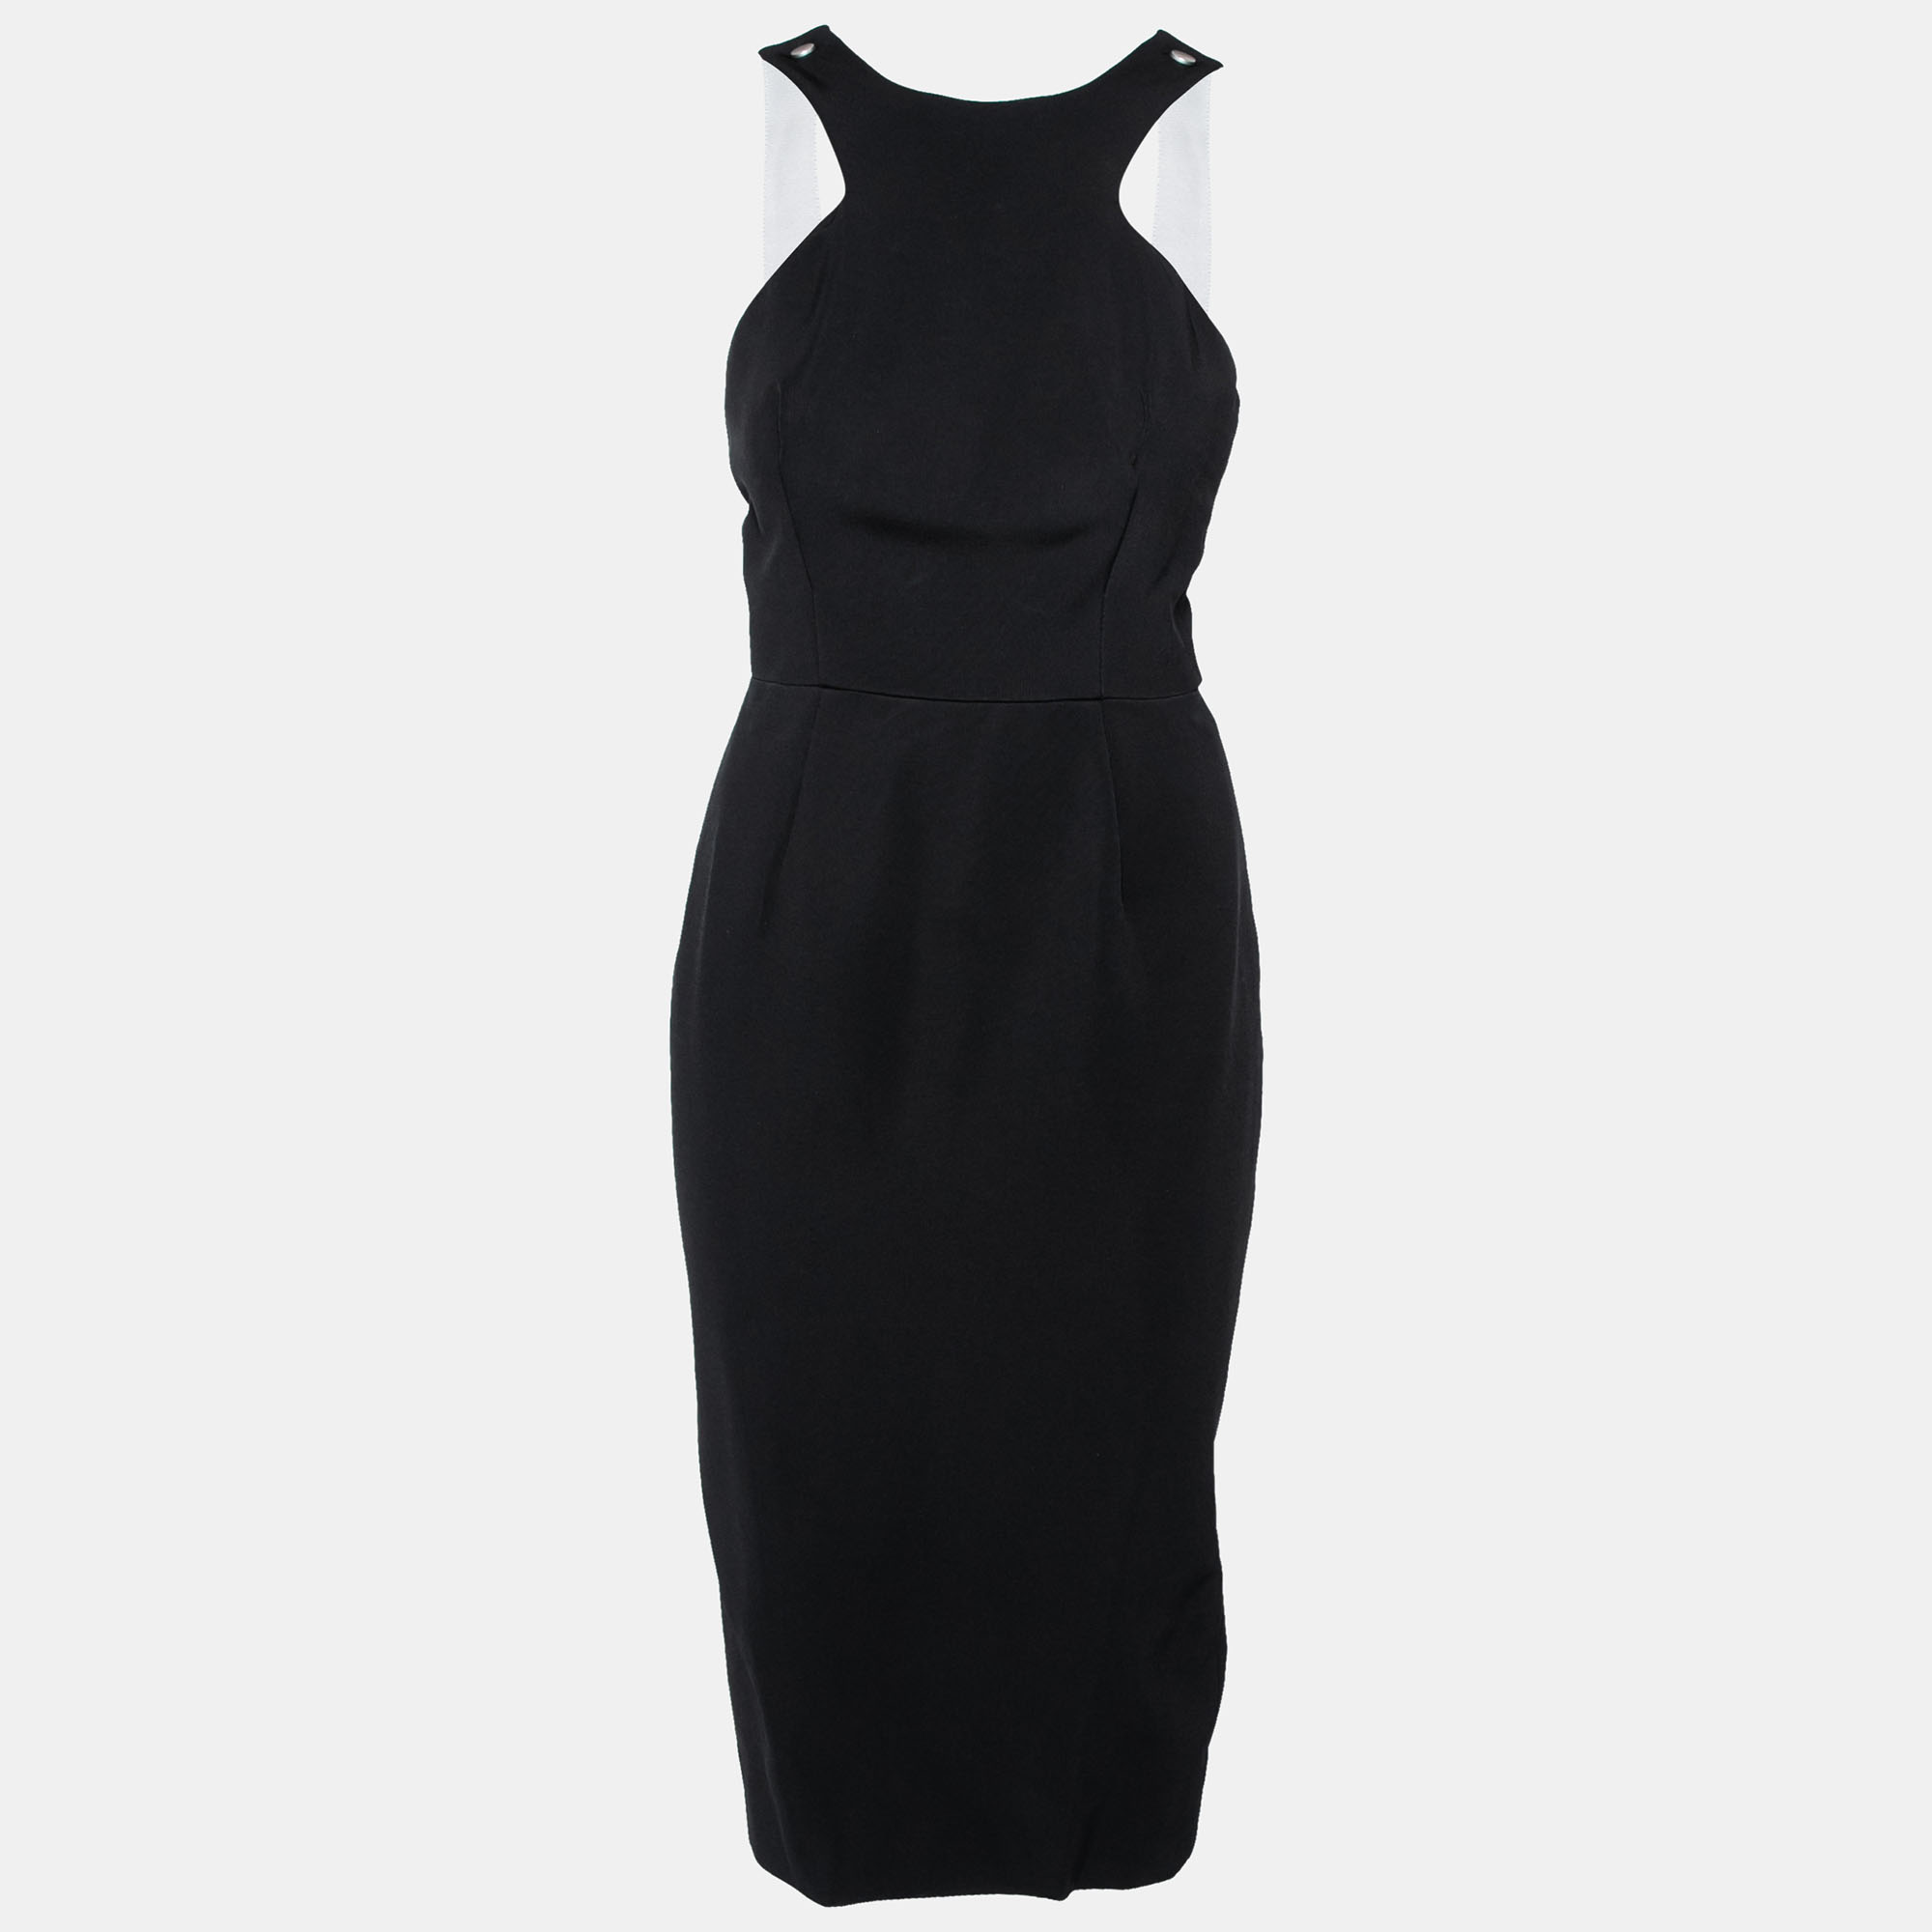 

Victoria Beckham Black Crepe Contrast Strap Detail Sleeveless Dress L